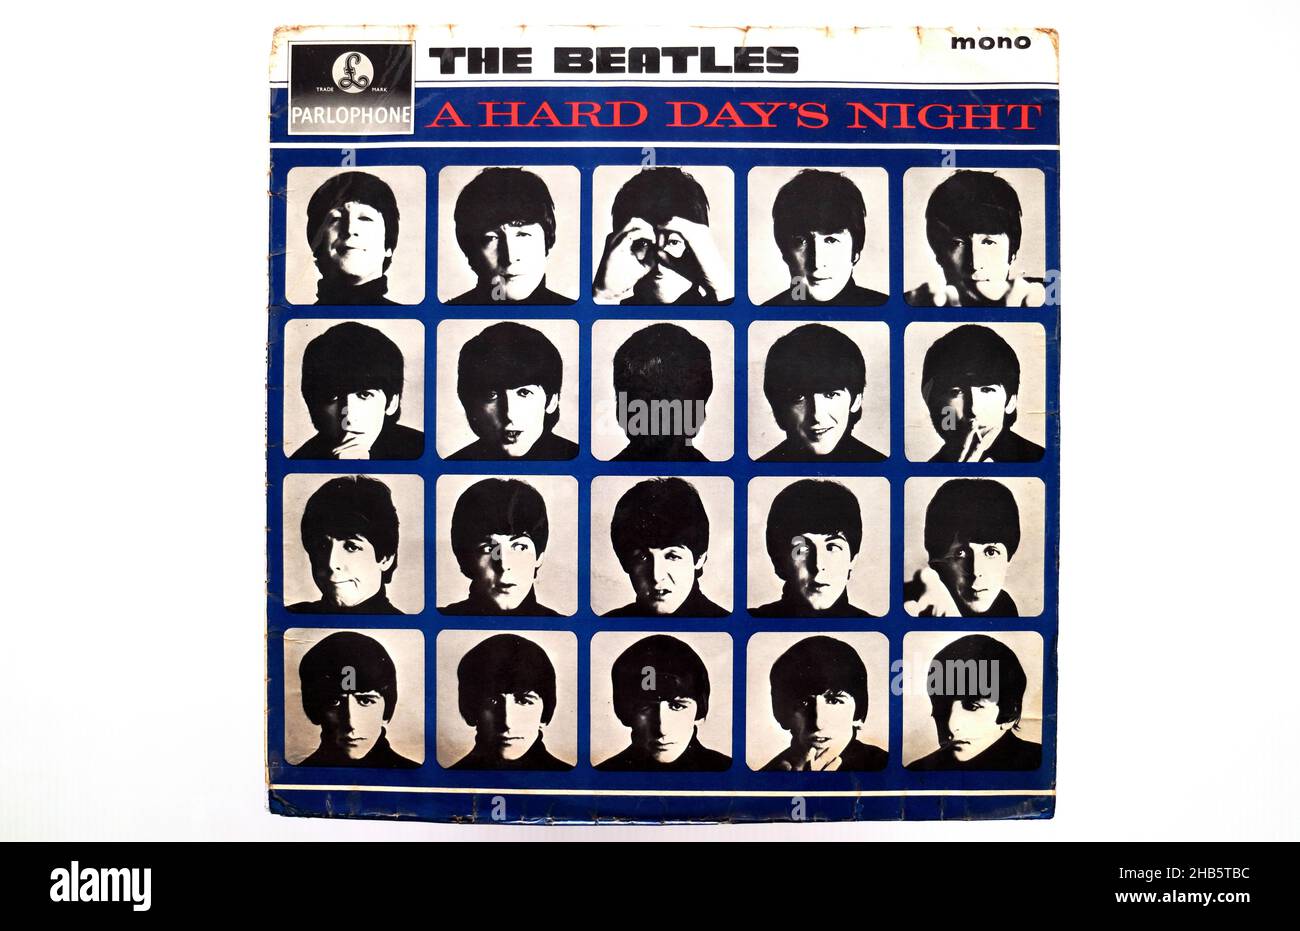 A Hard Day's Night vinyl album LP record by The Beatles - Original 1964 mono pressing. Stock Photo